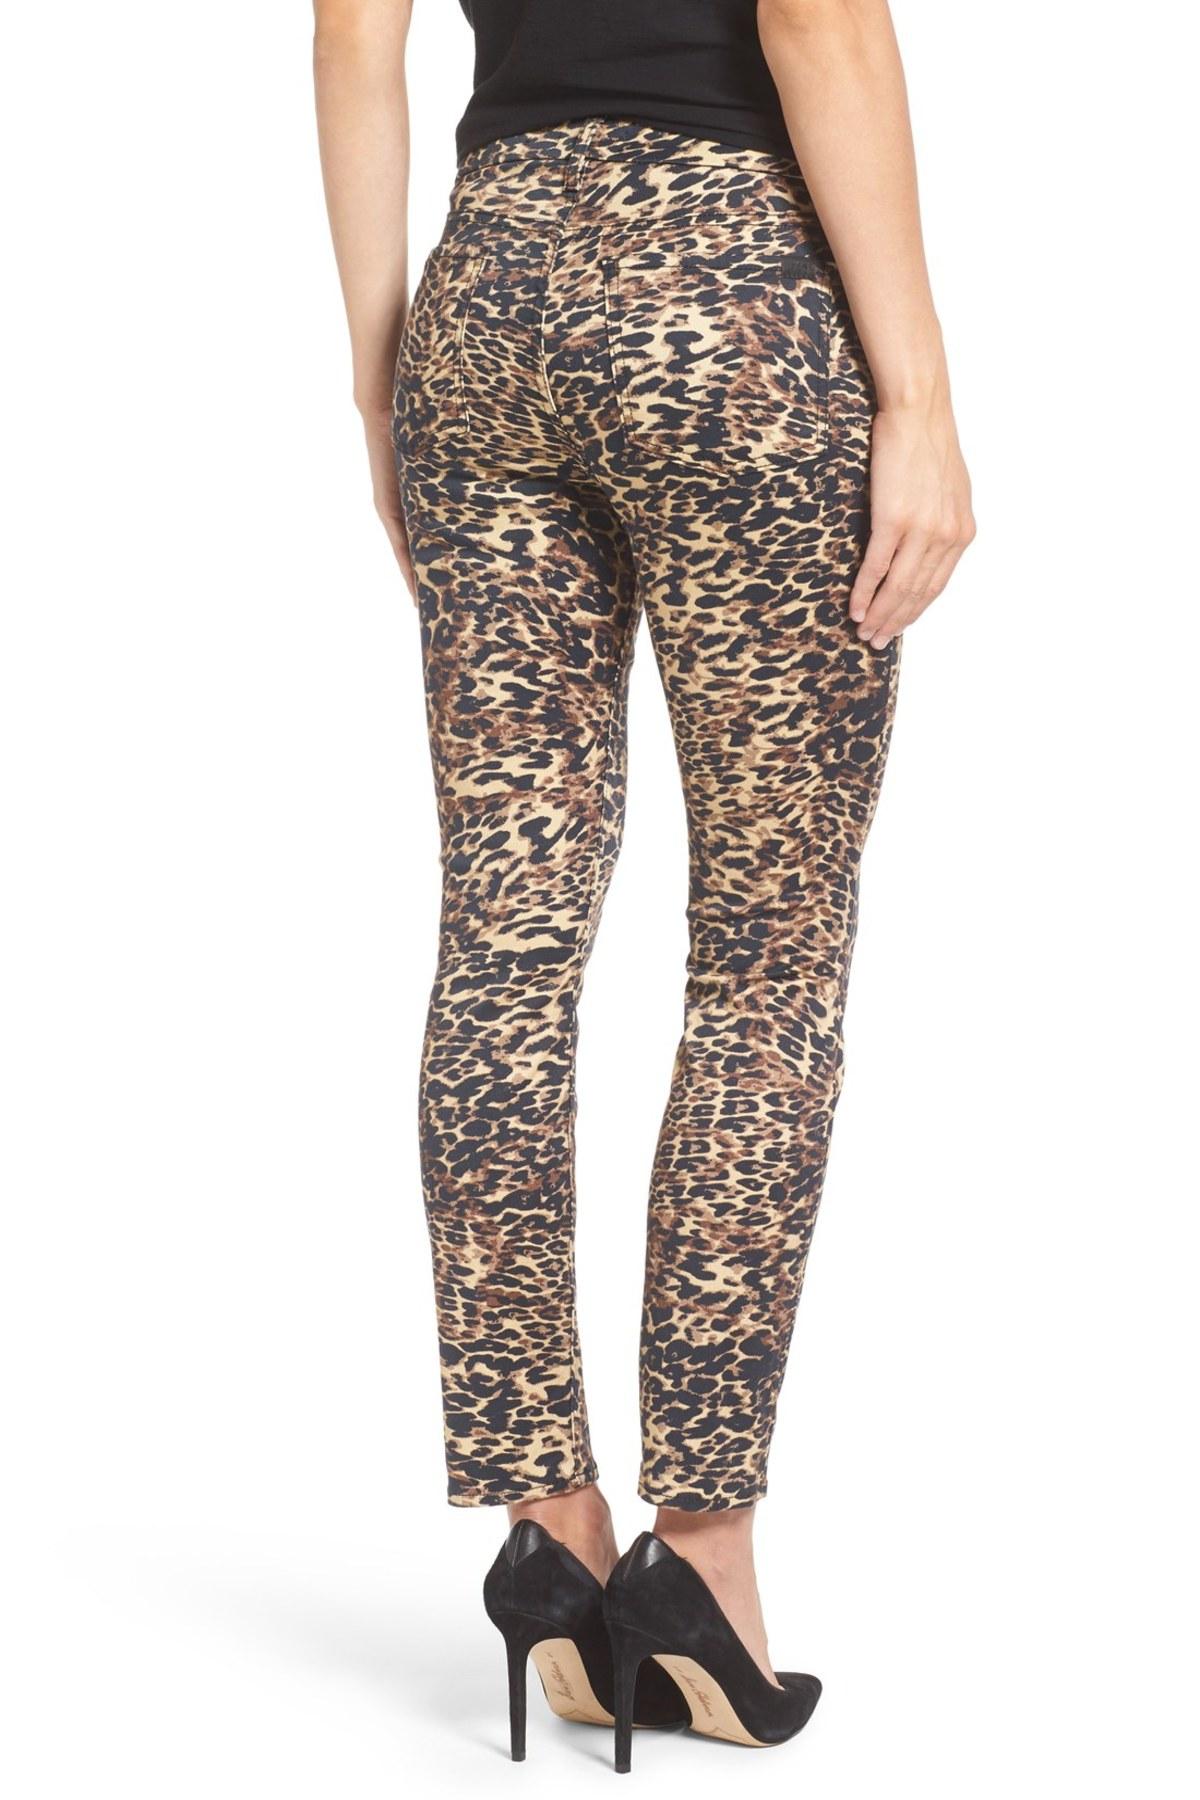 Lyst - Jen7 Leopard Print Stretch Ankle Skinny Jeans